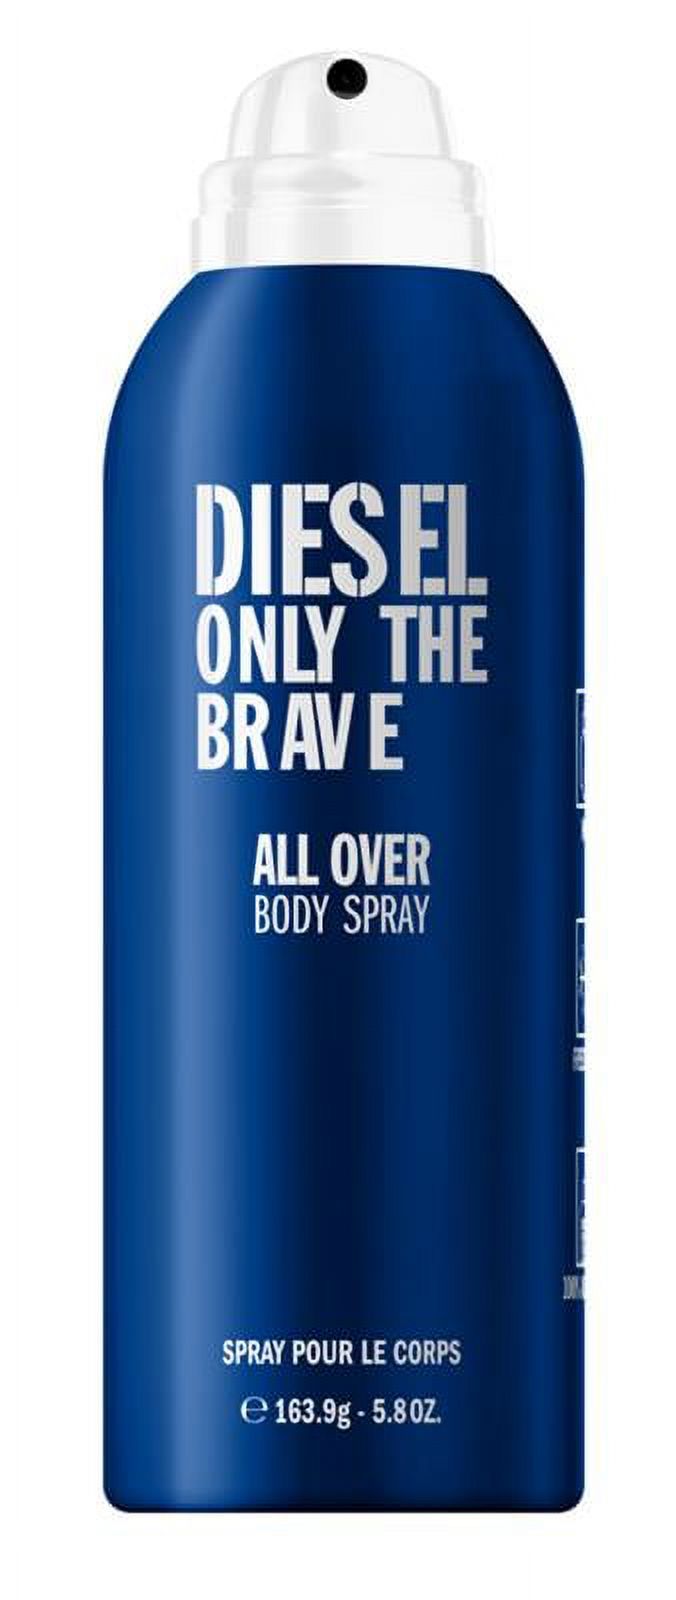 Diesel Only the Brave Body Spray for Men, 5.8 oz - image 1 of 5